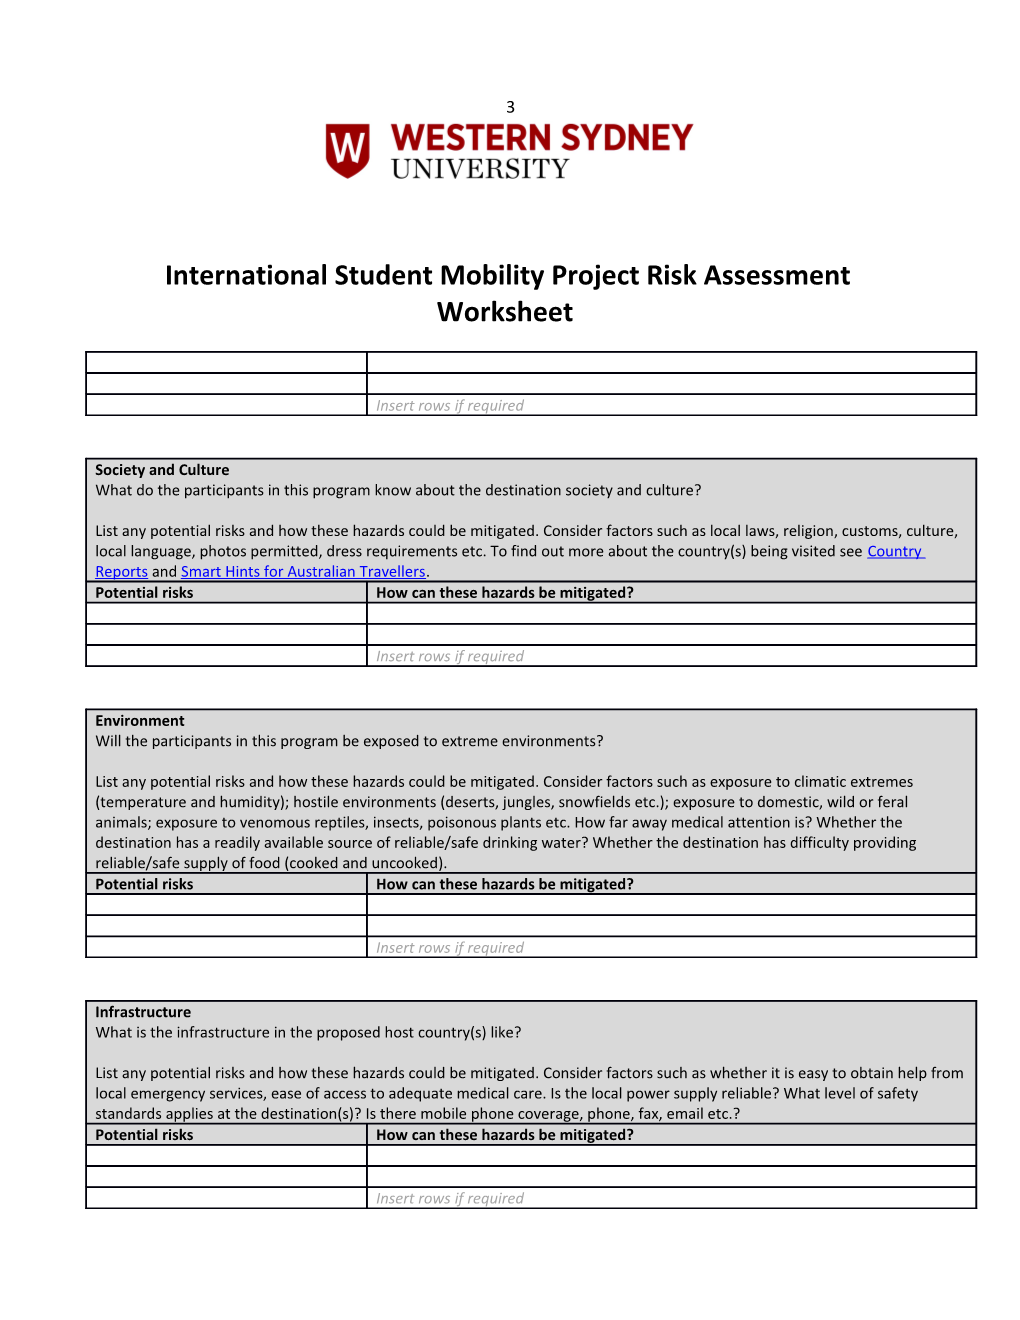 International Student Mobility Project Risk Assessment Worksheet